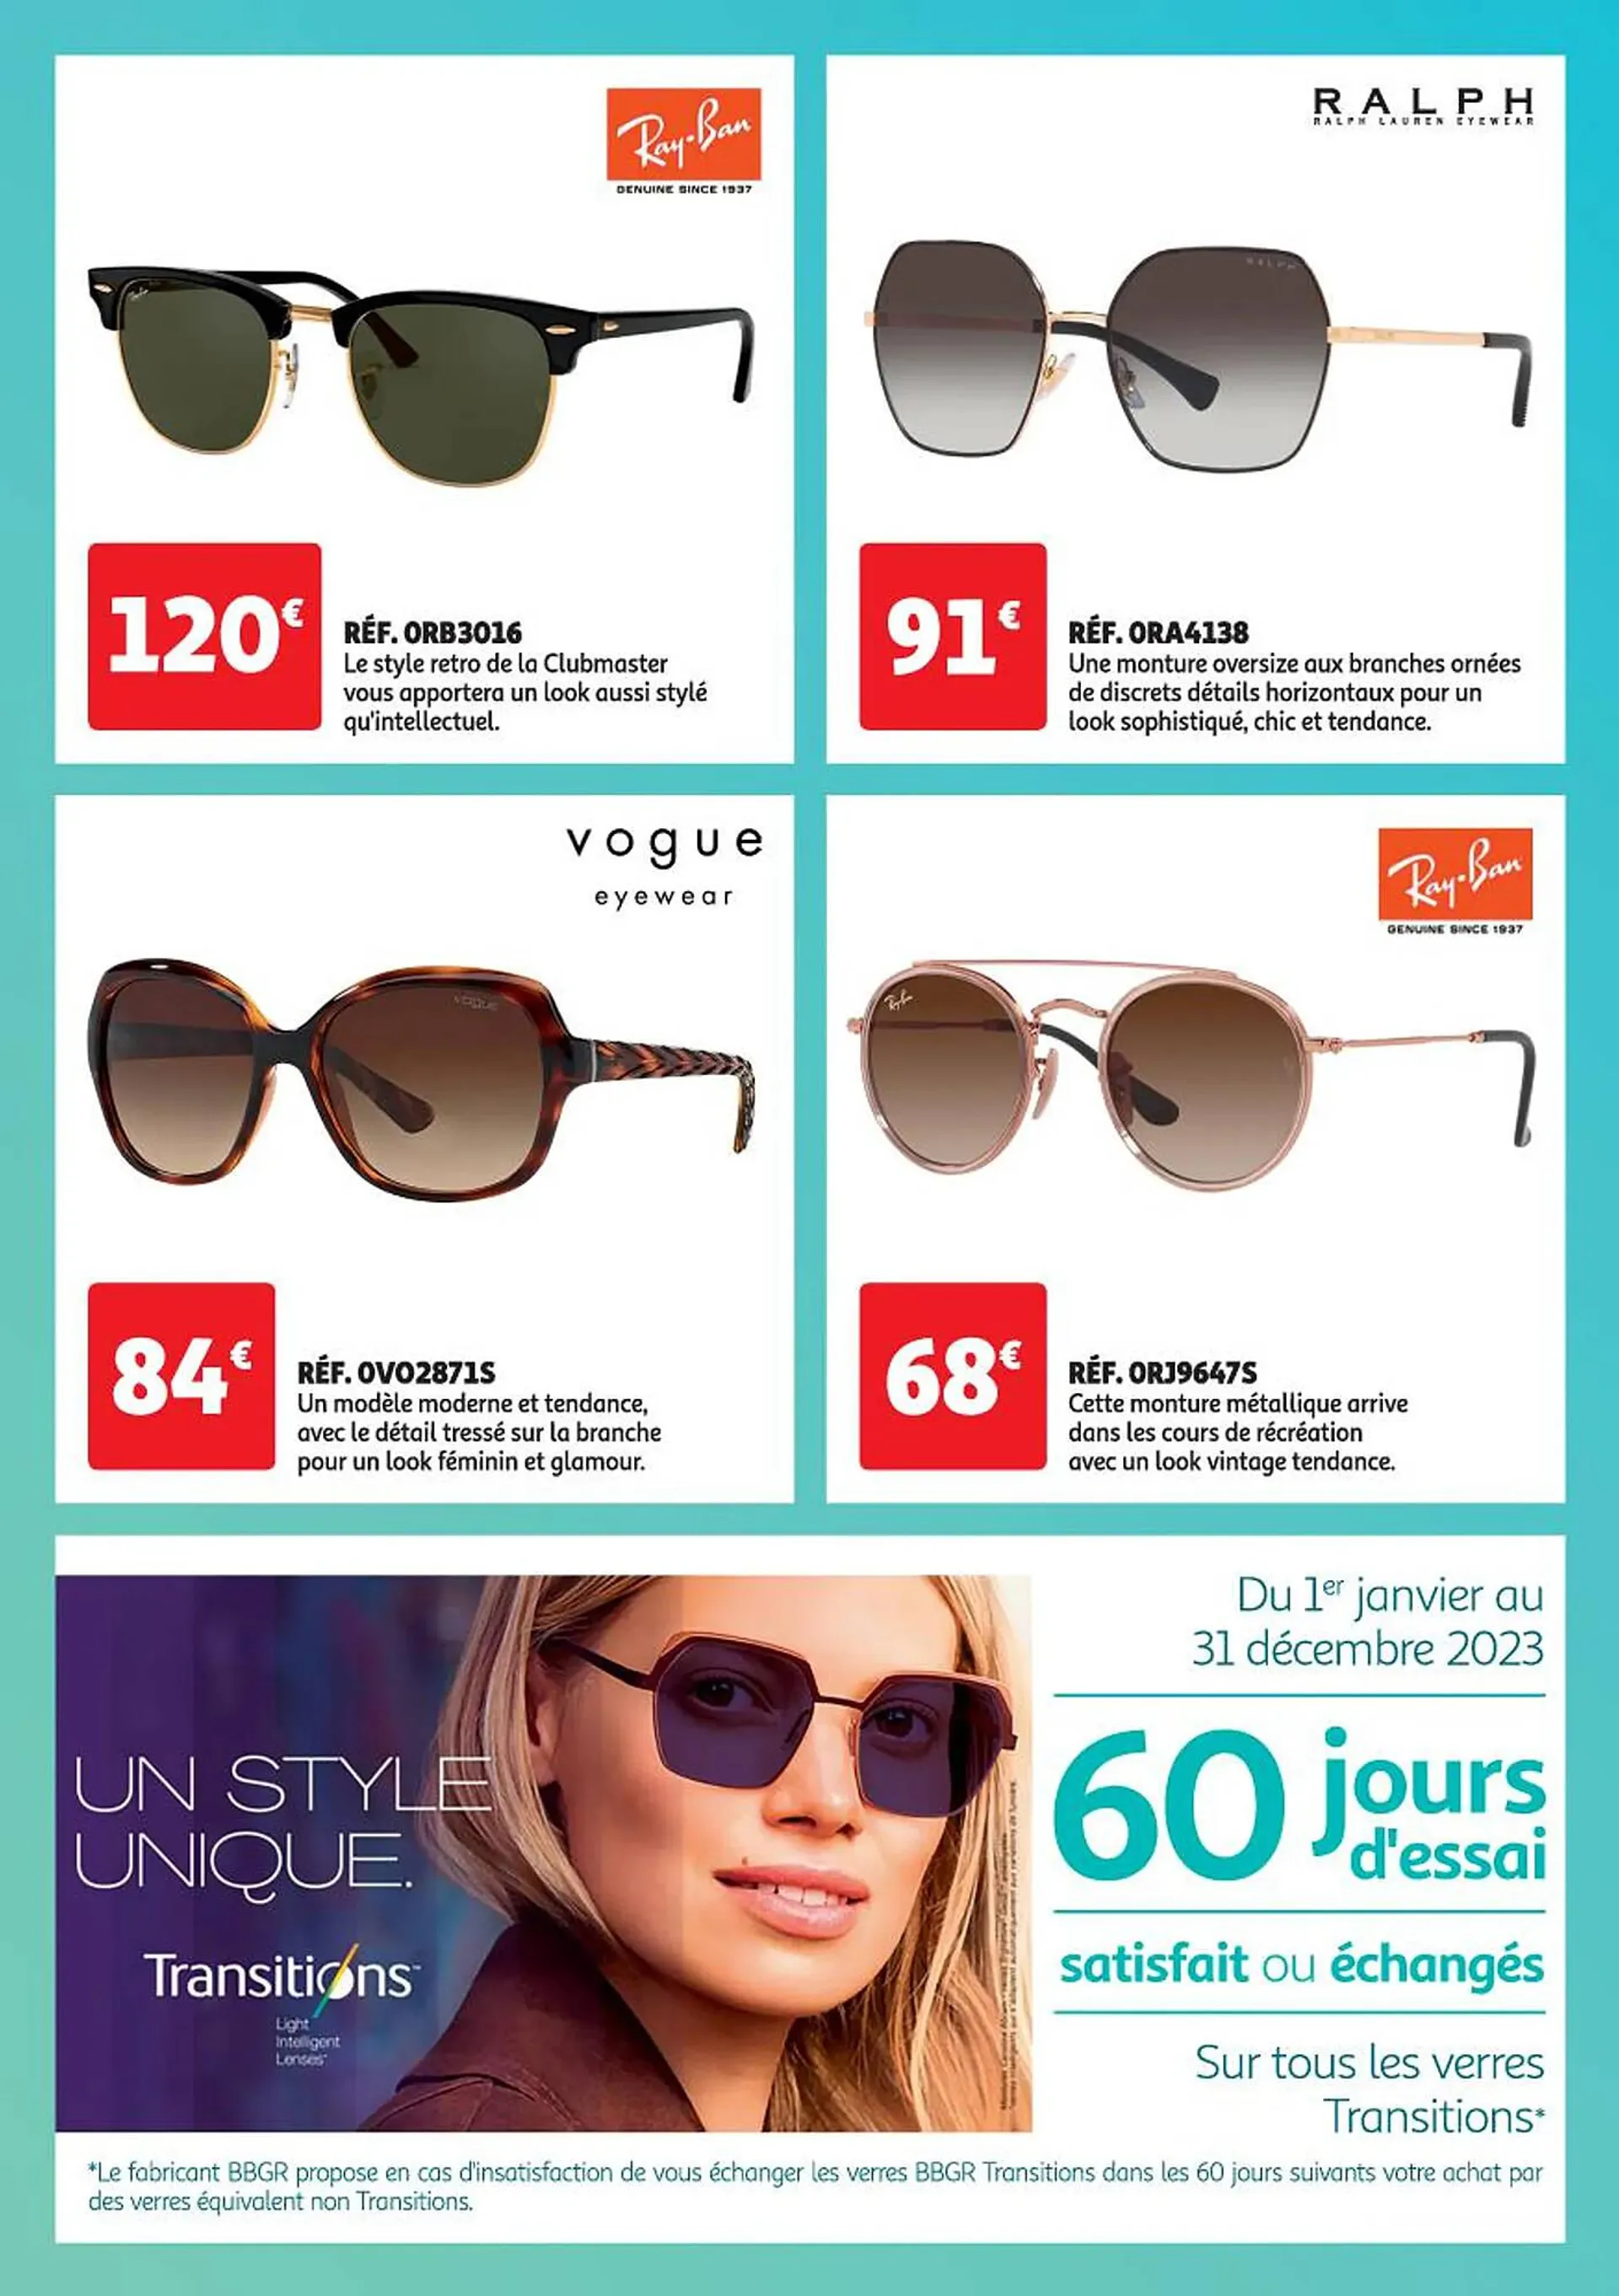 Catalogue Auchan - 3